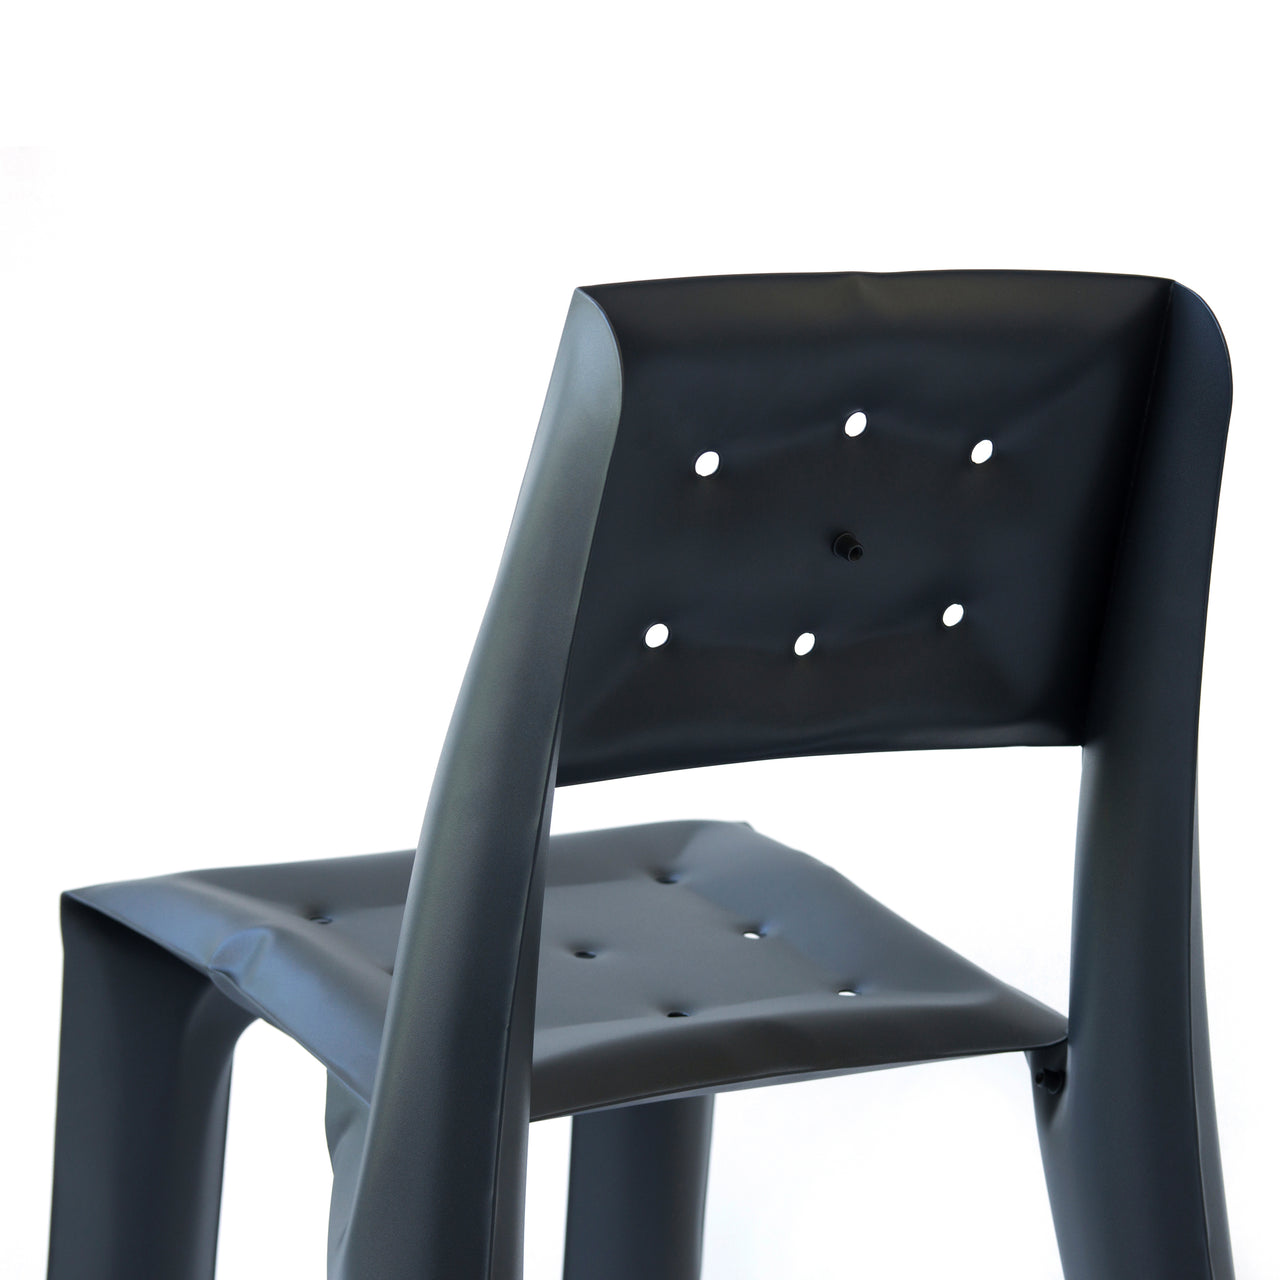 Chippensteel 0.5 Chair